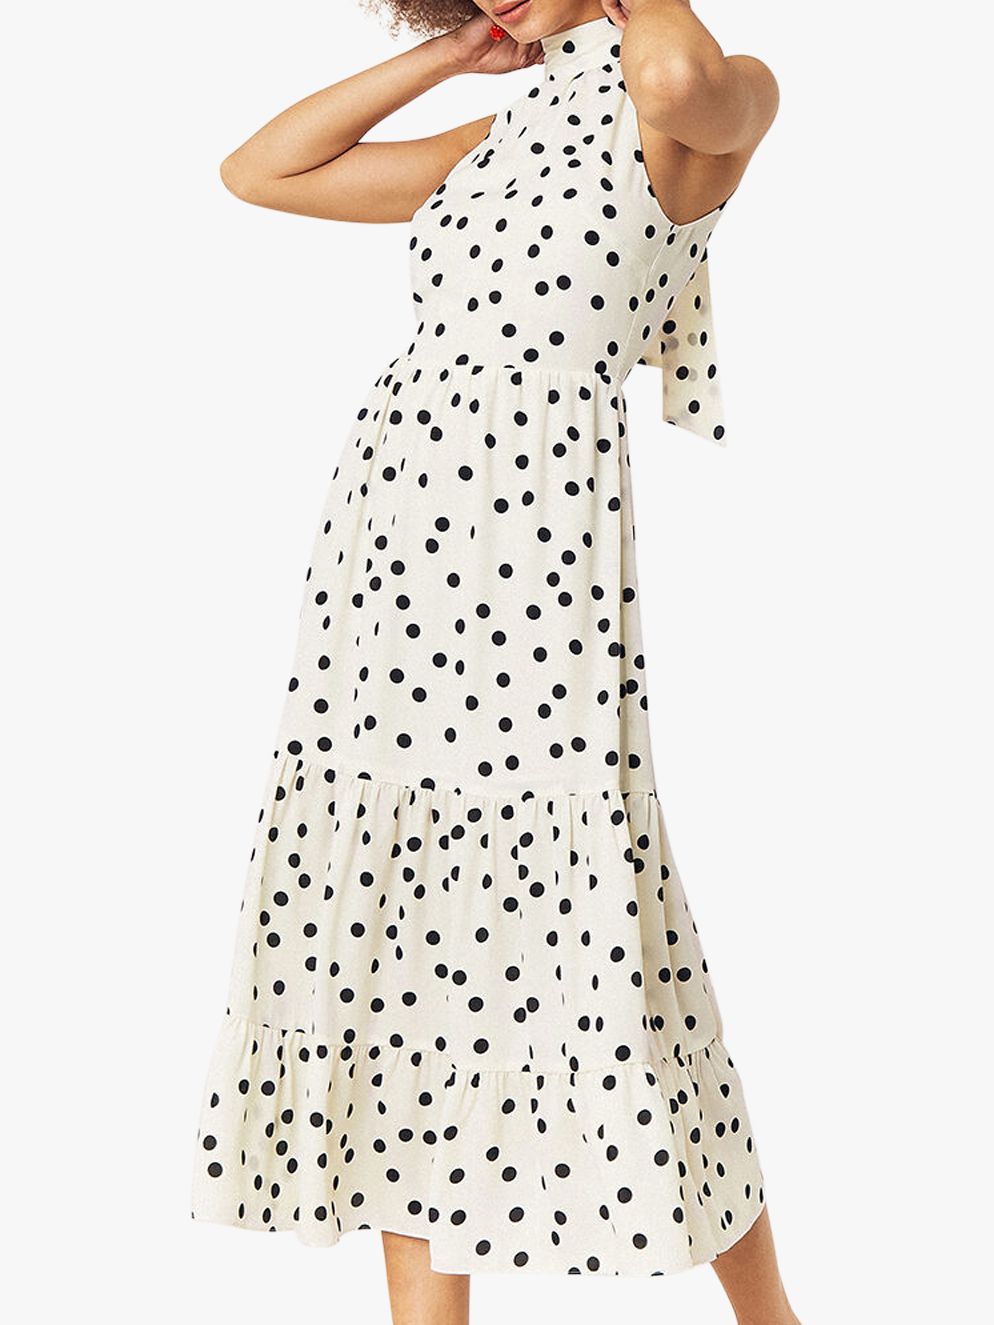 oasis black and white polka dot dress